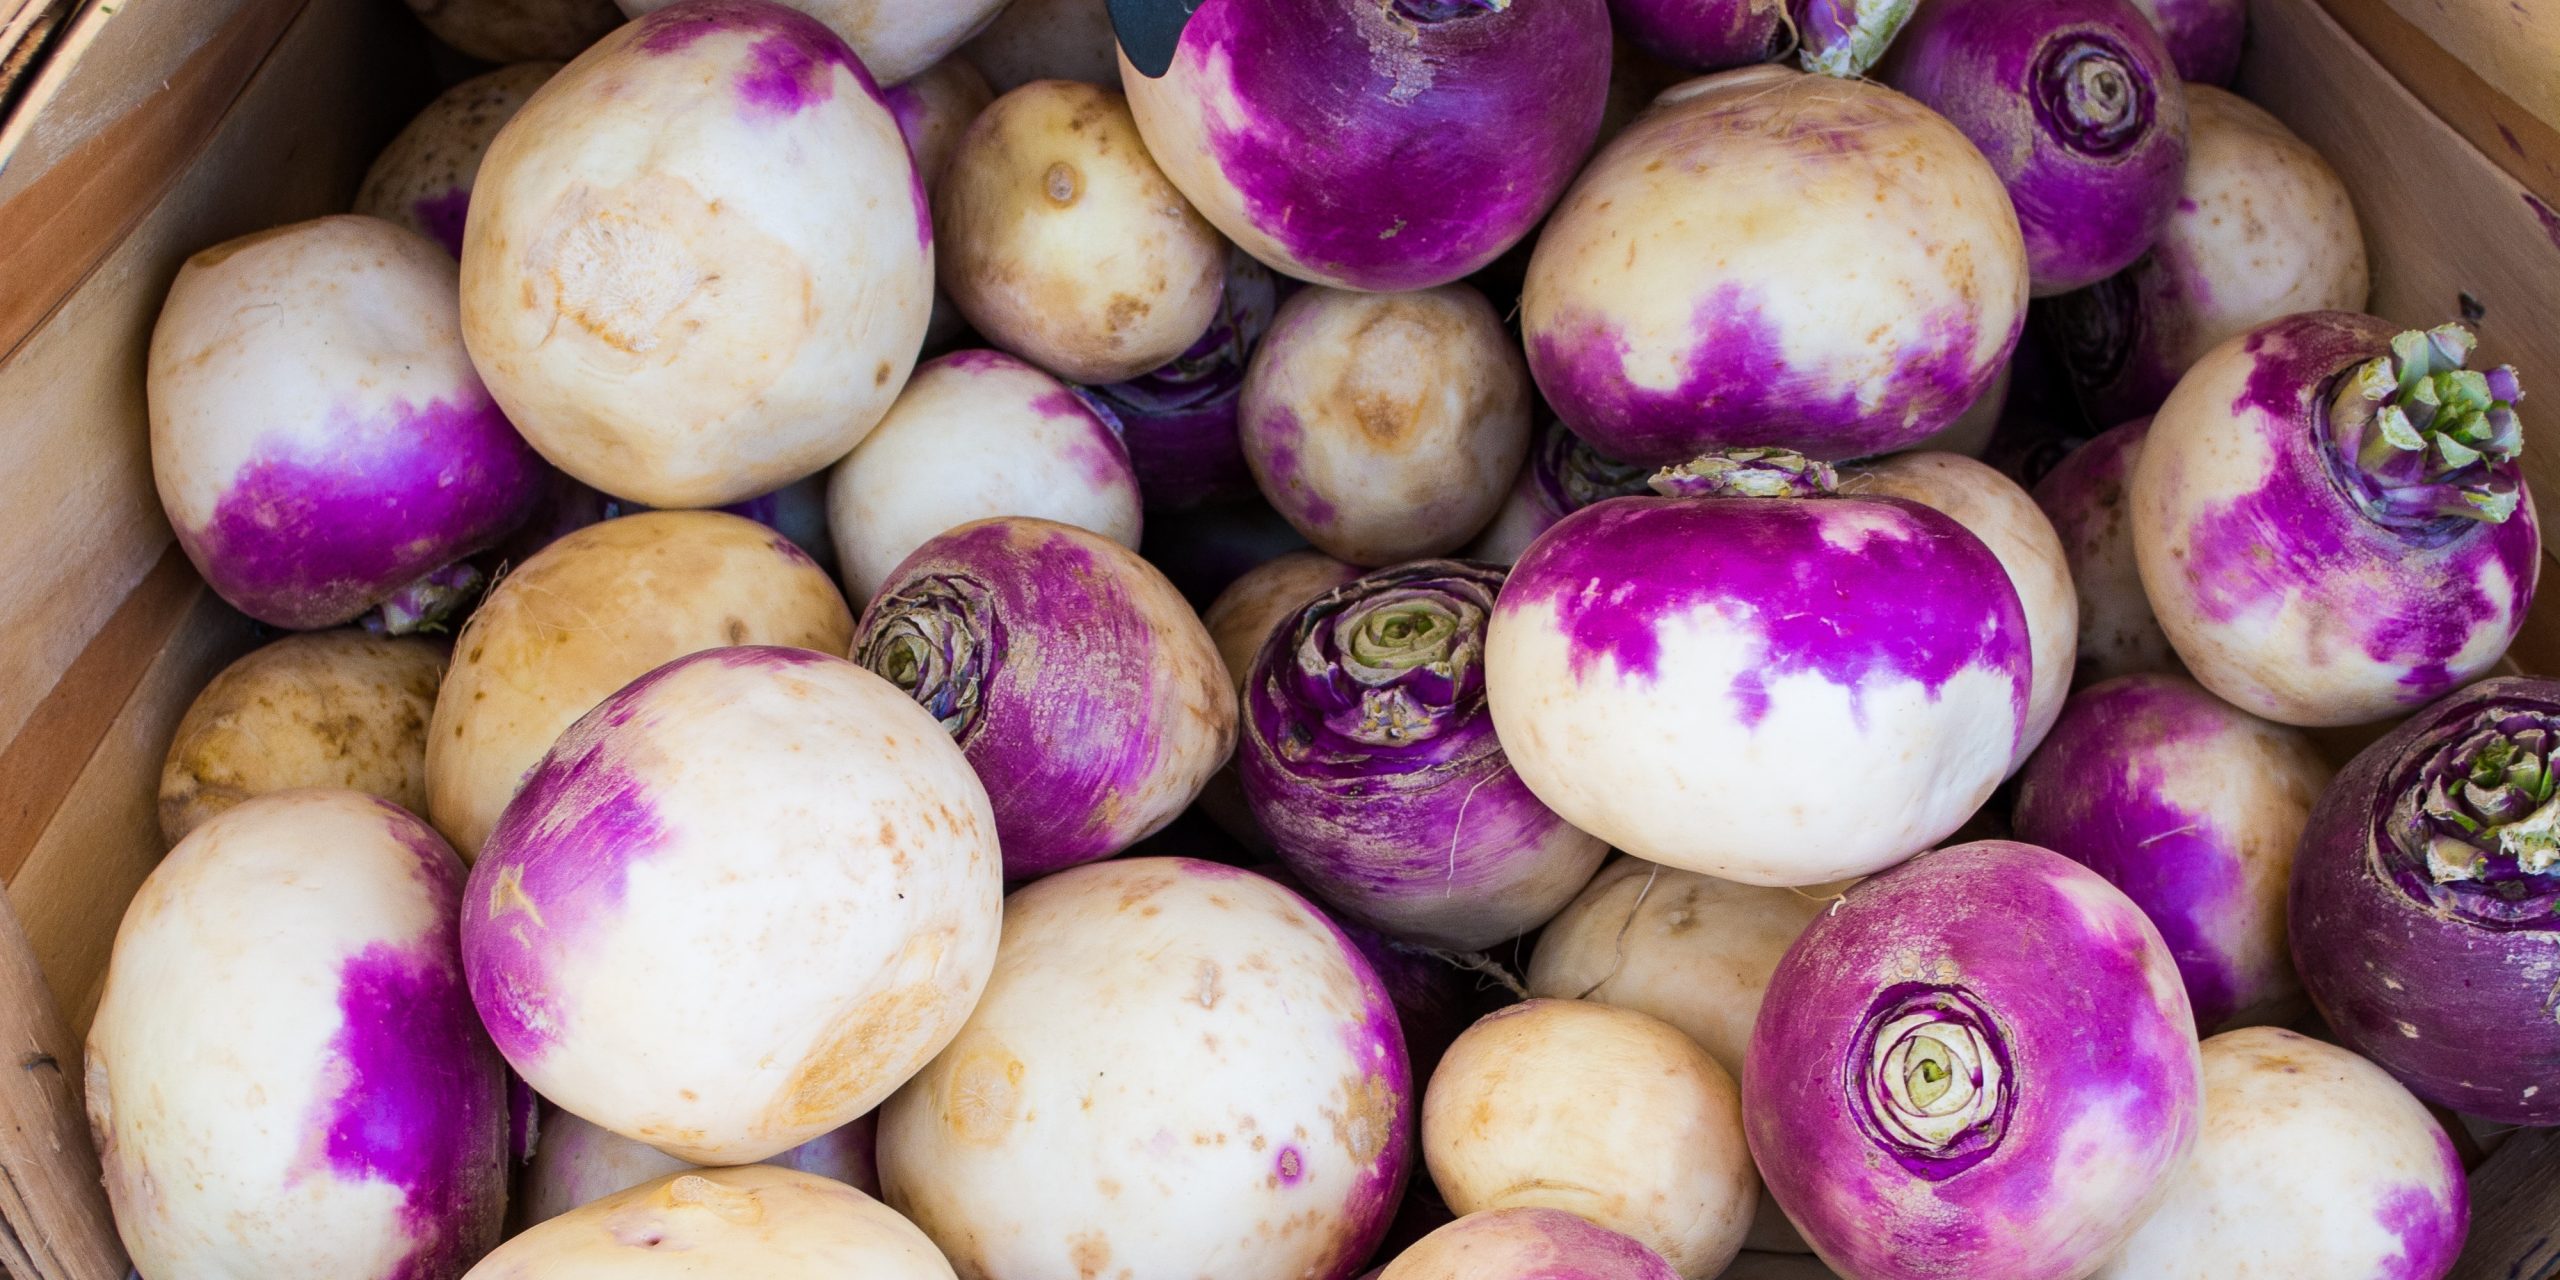 local turnip